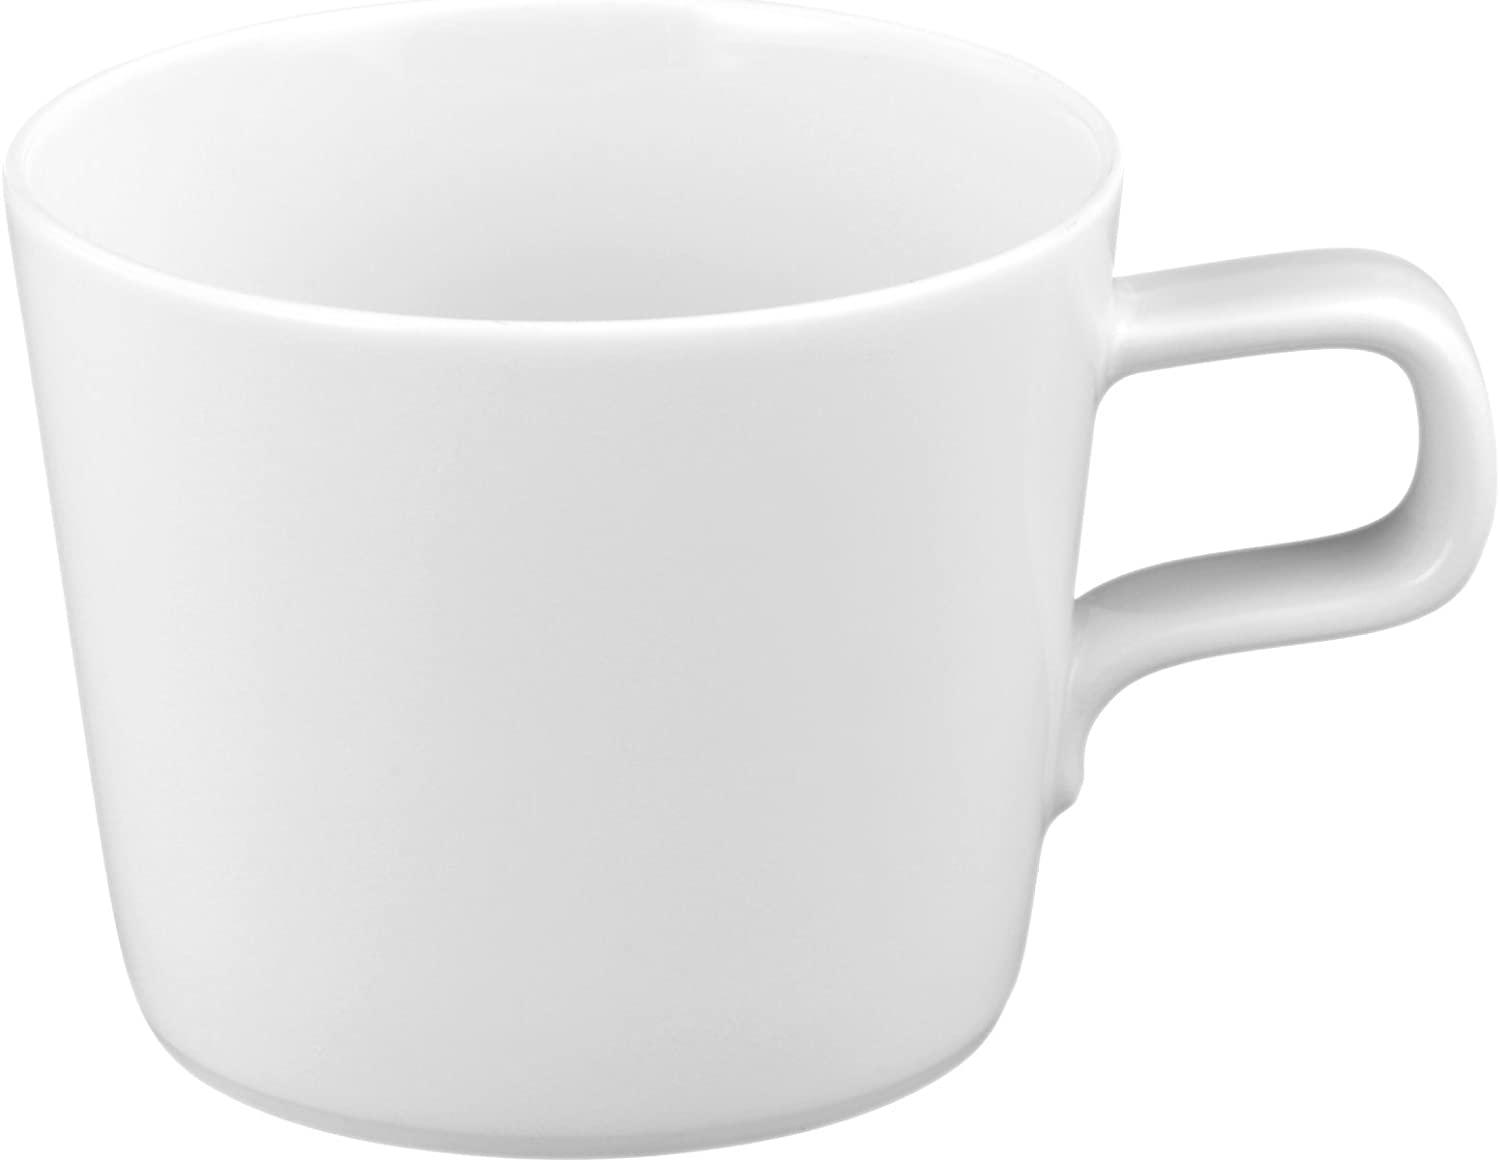 No Limits 3 Cups for Mug by Seltmann Weiden